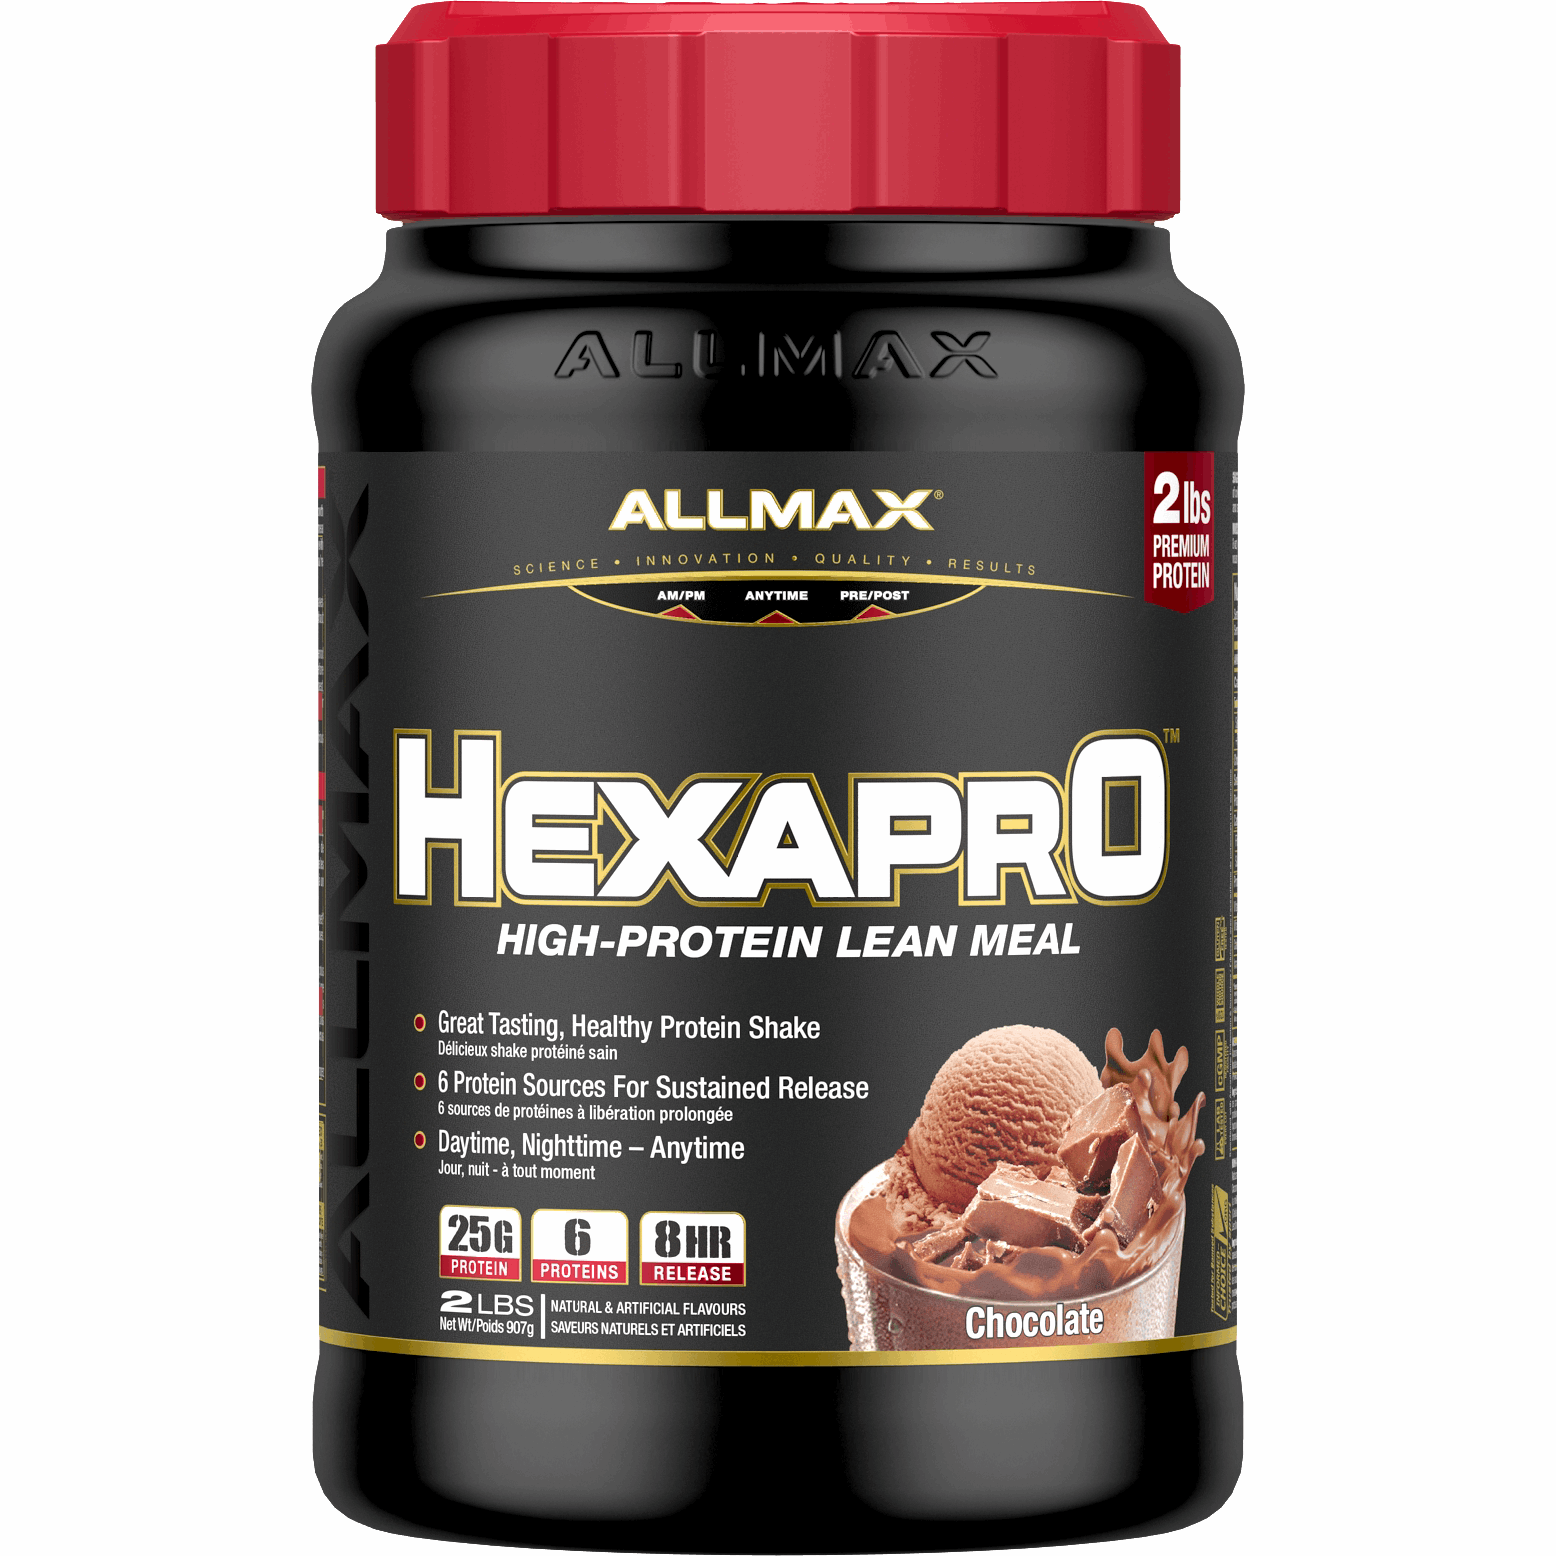 ALLMAX Hexapro (2lbs) Whey Protein Blend Chocolate Allmax Nutrition allmax-hexapro-3lbs